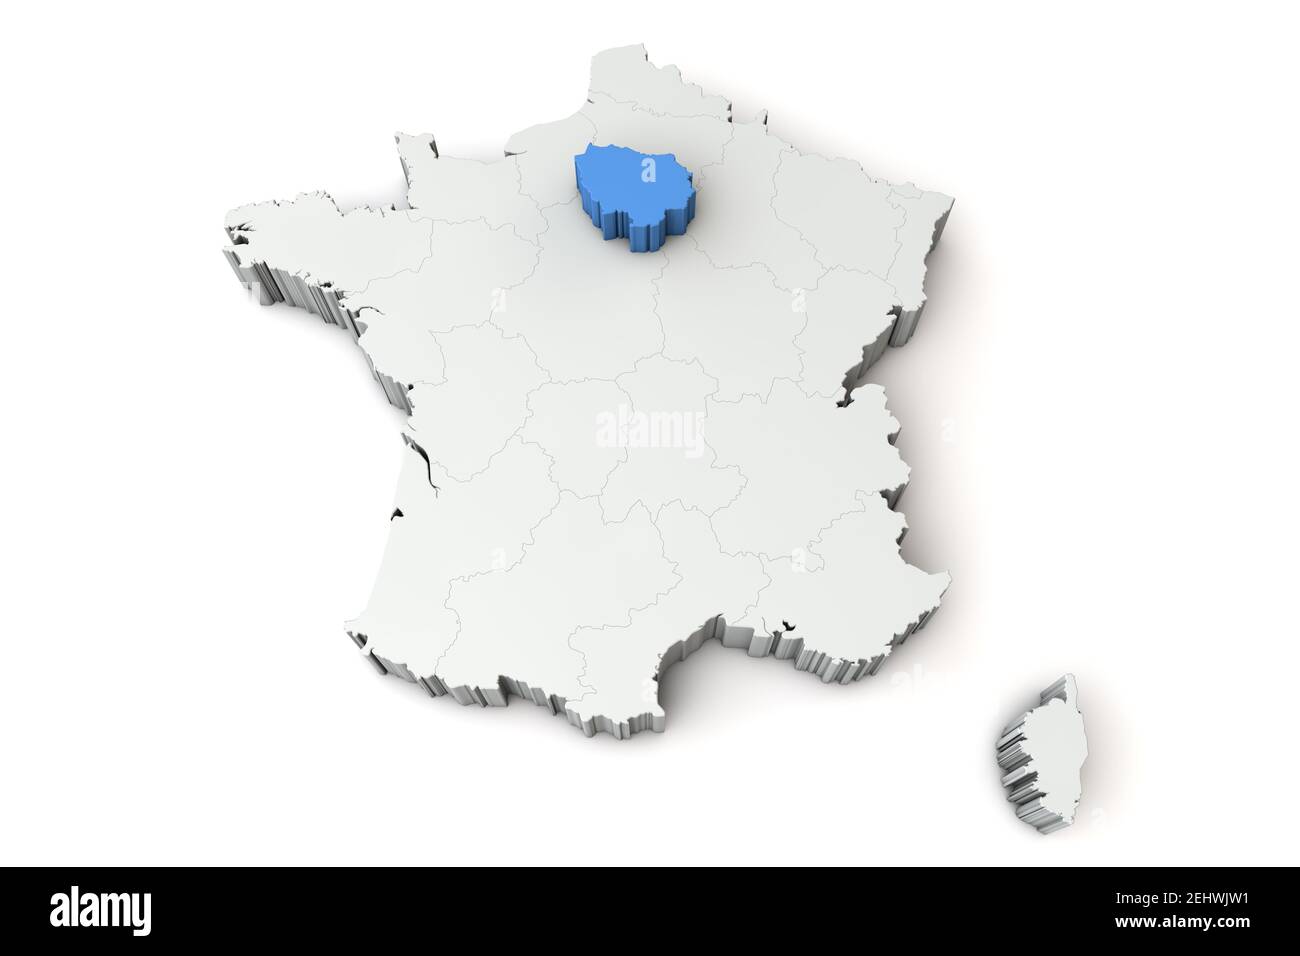 Map of France showing Ile de France region. 3D Rendering Stock Photo